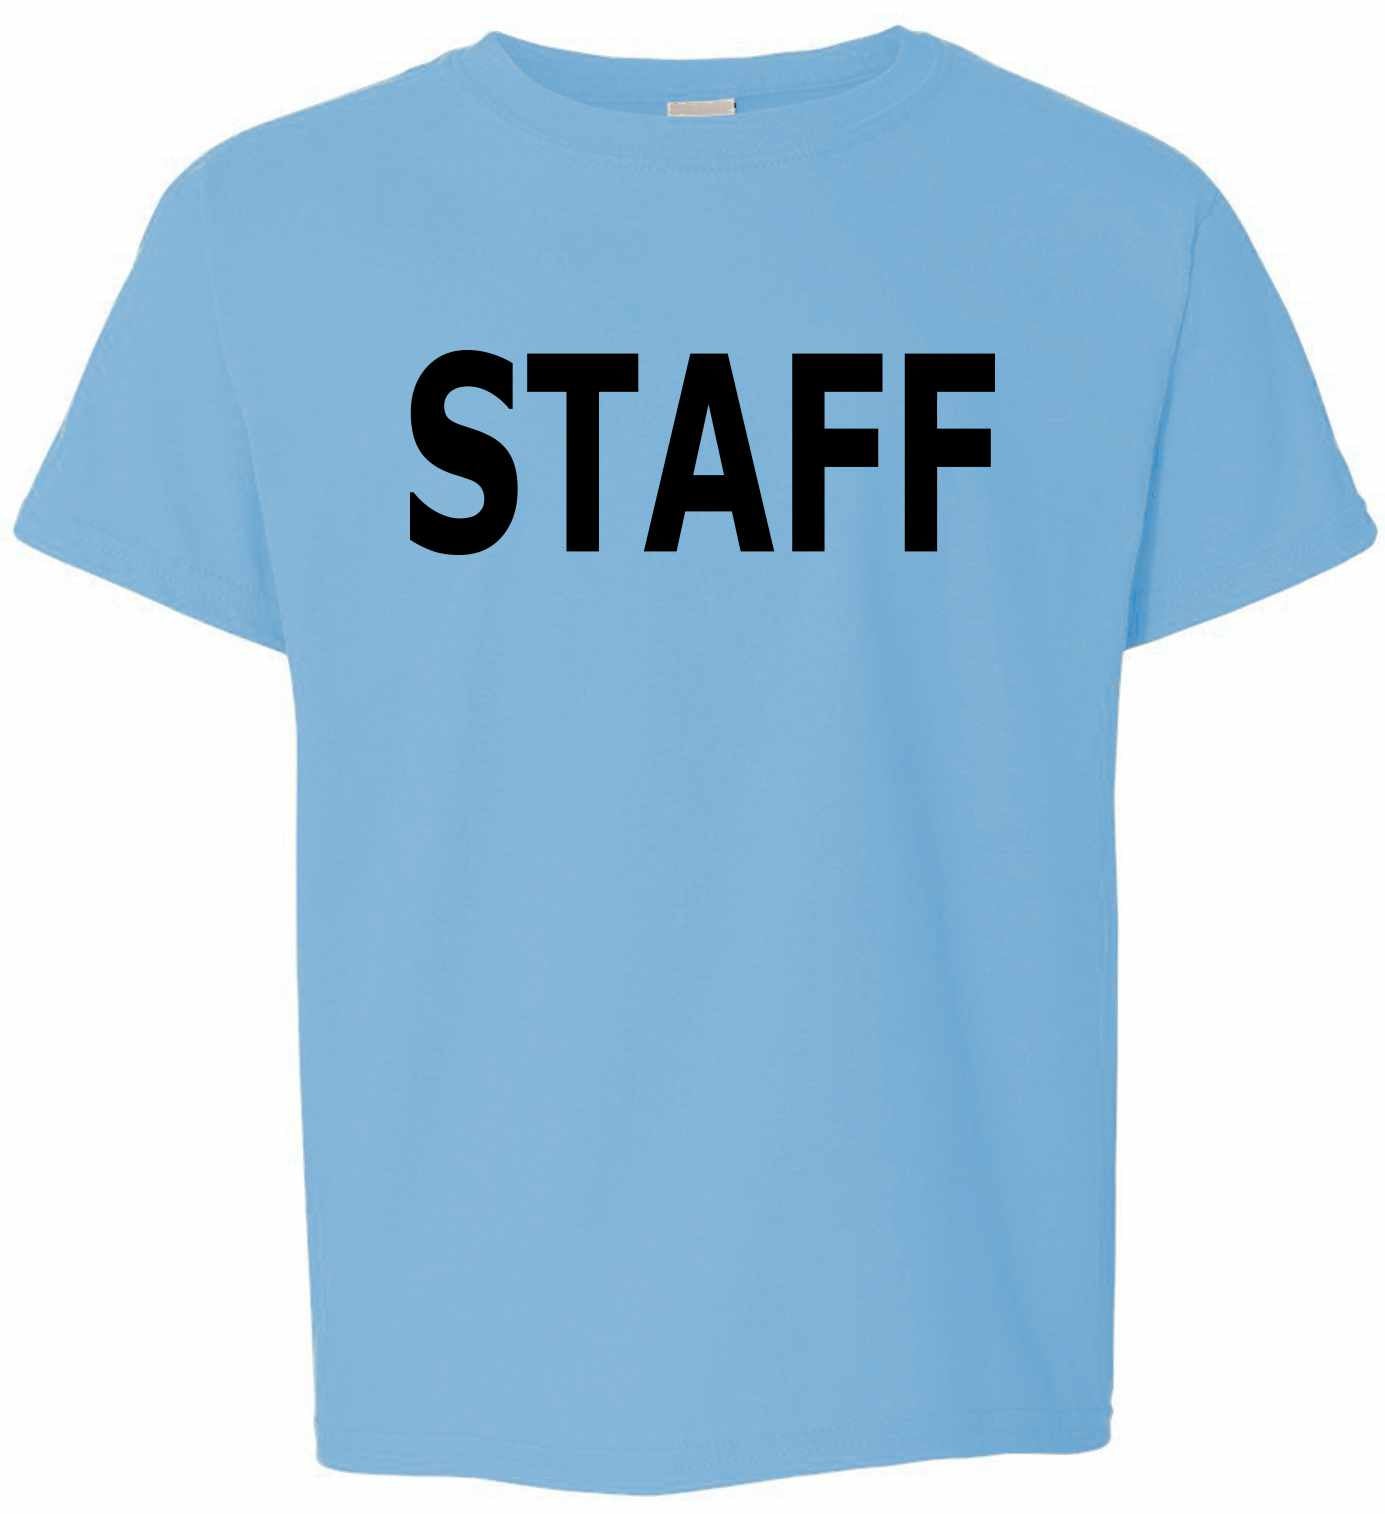 STAFF on Kids T-Shirt (#923-201)